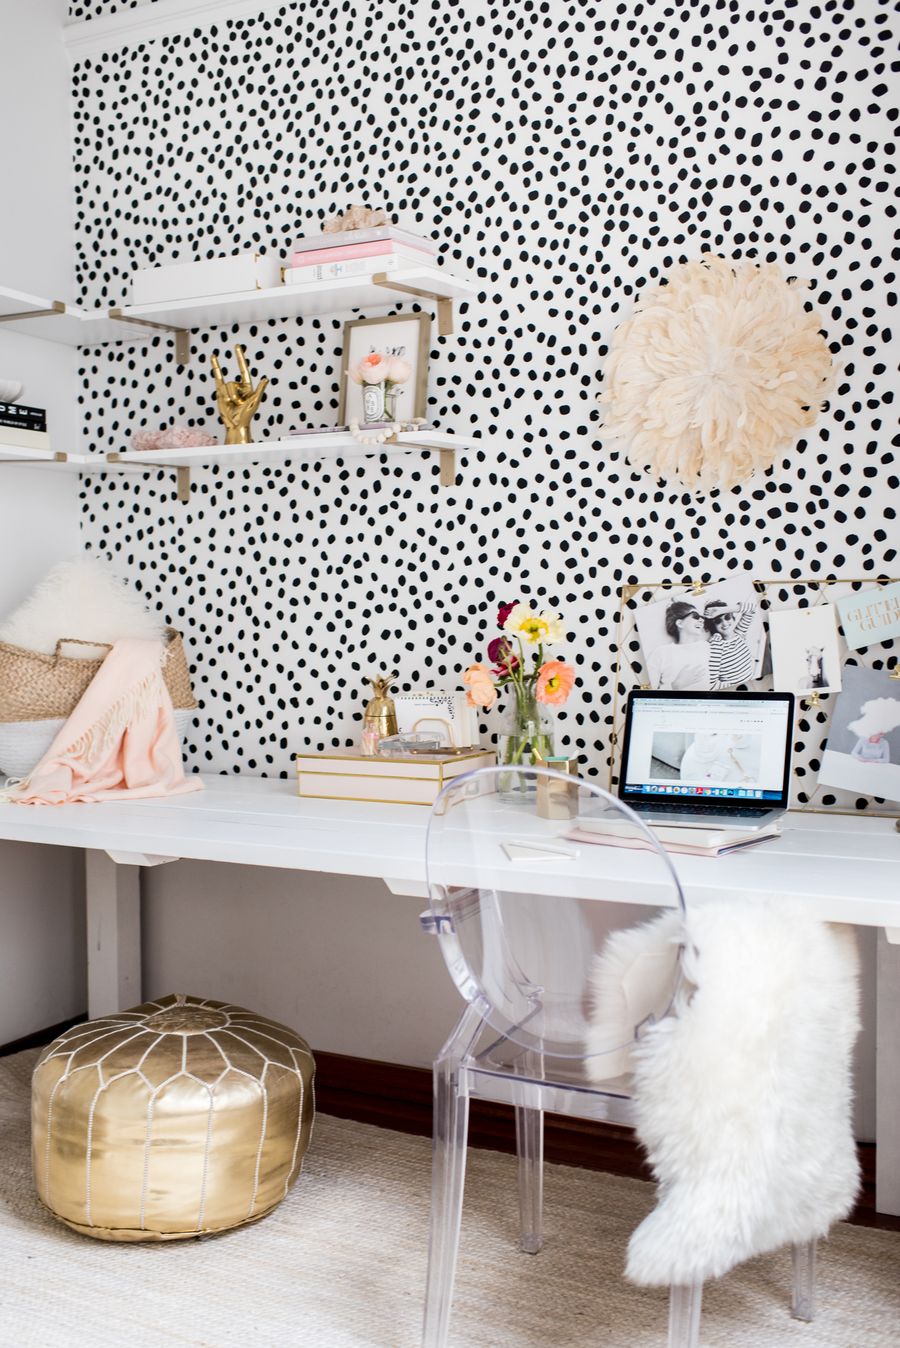 Glam Office with Polka Dot Wallpaper via Urban Walls